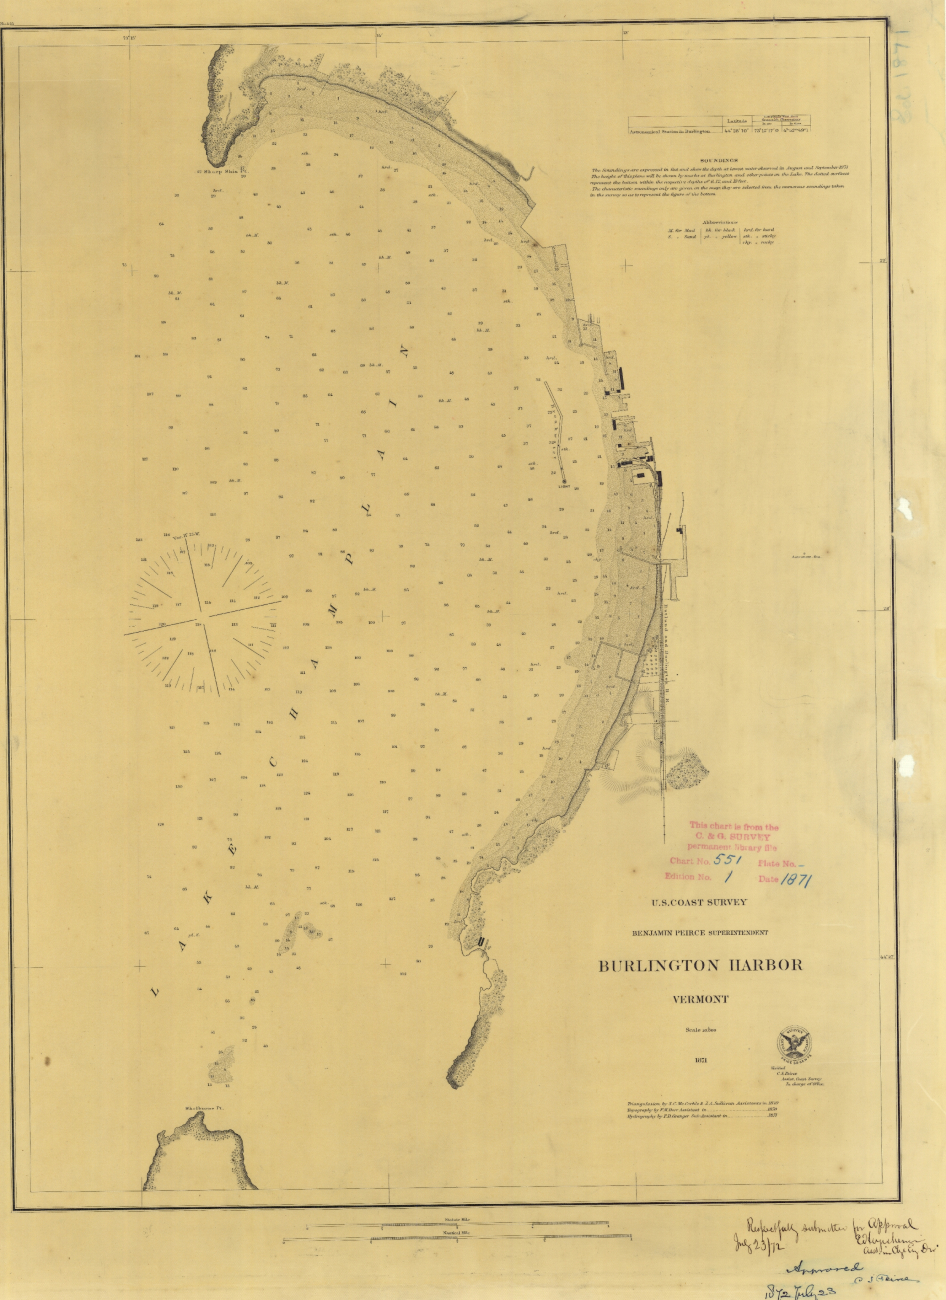 Chart of Burlington Harbor, Vermont under Benjamin Peirce superintendent